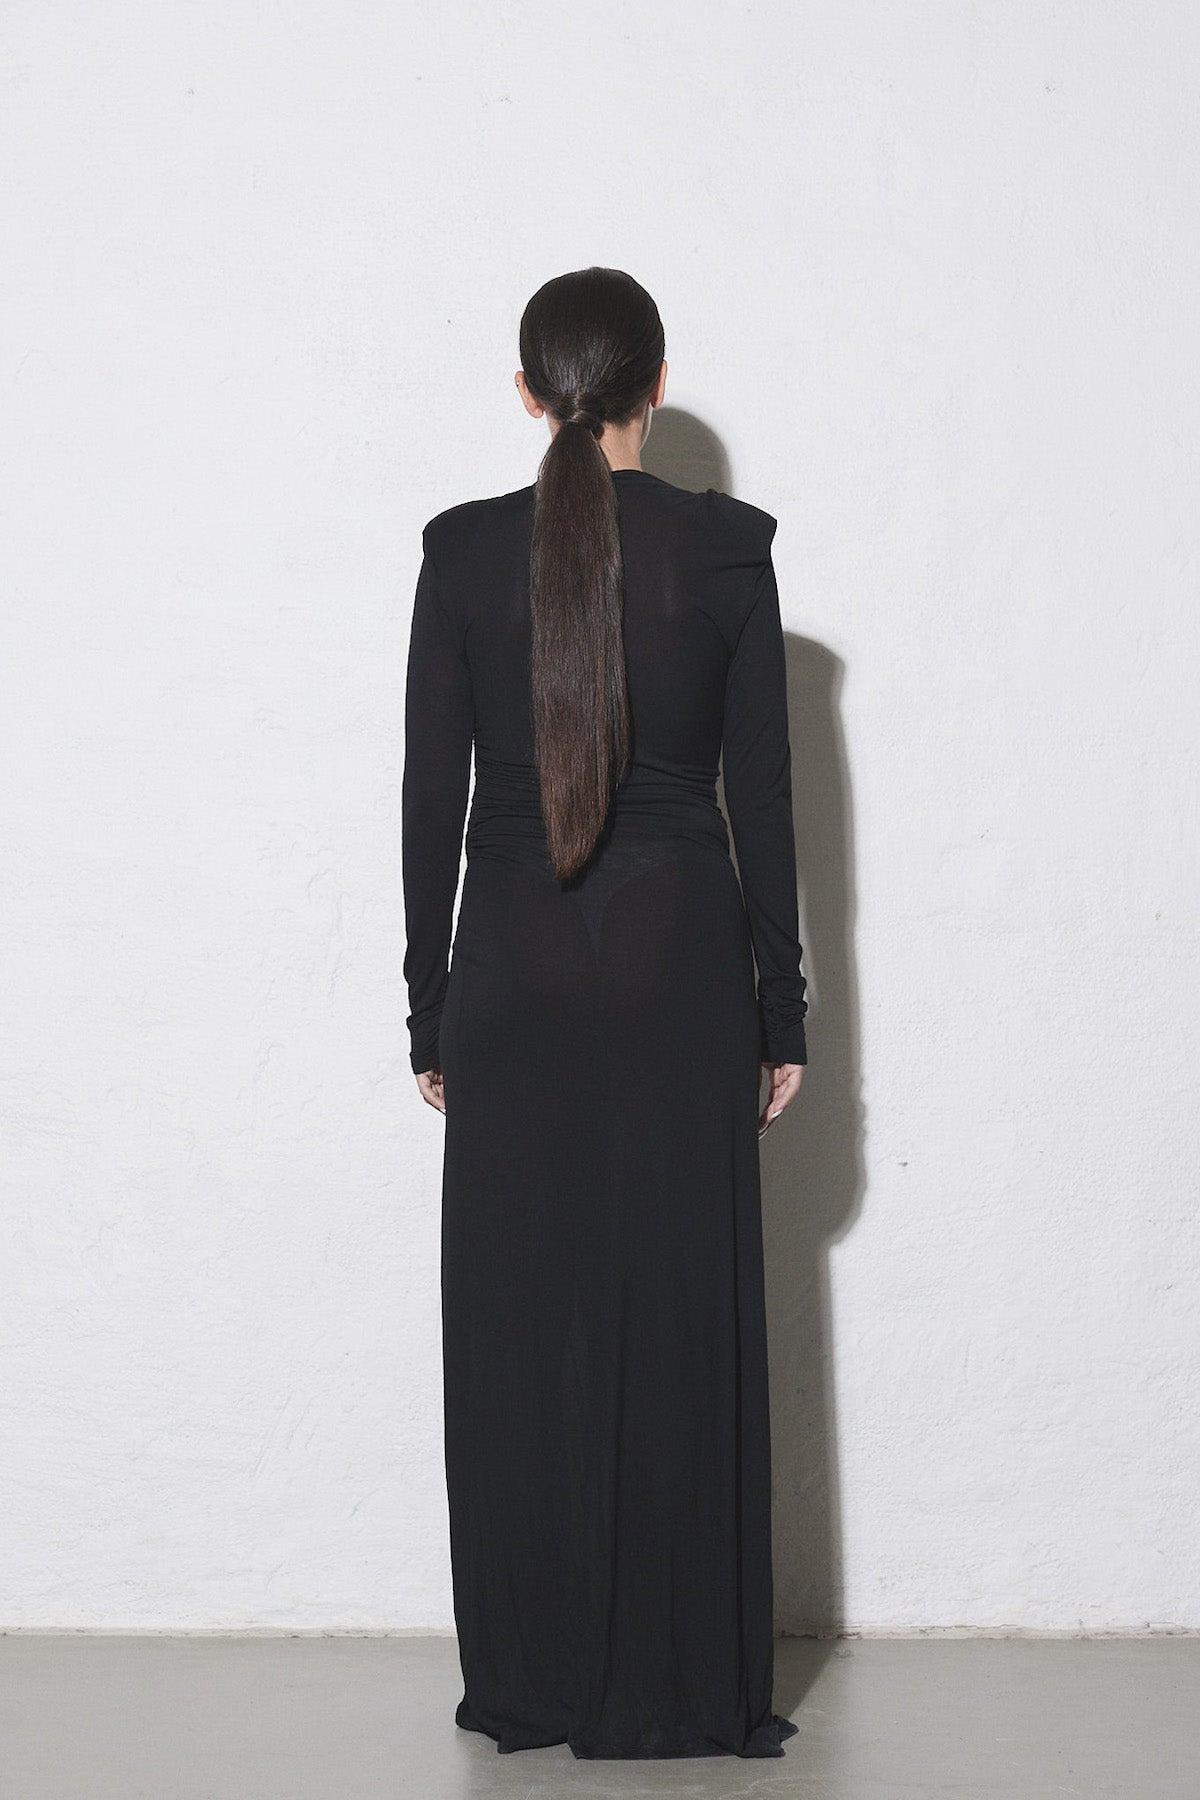 San Dona Dress - Black